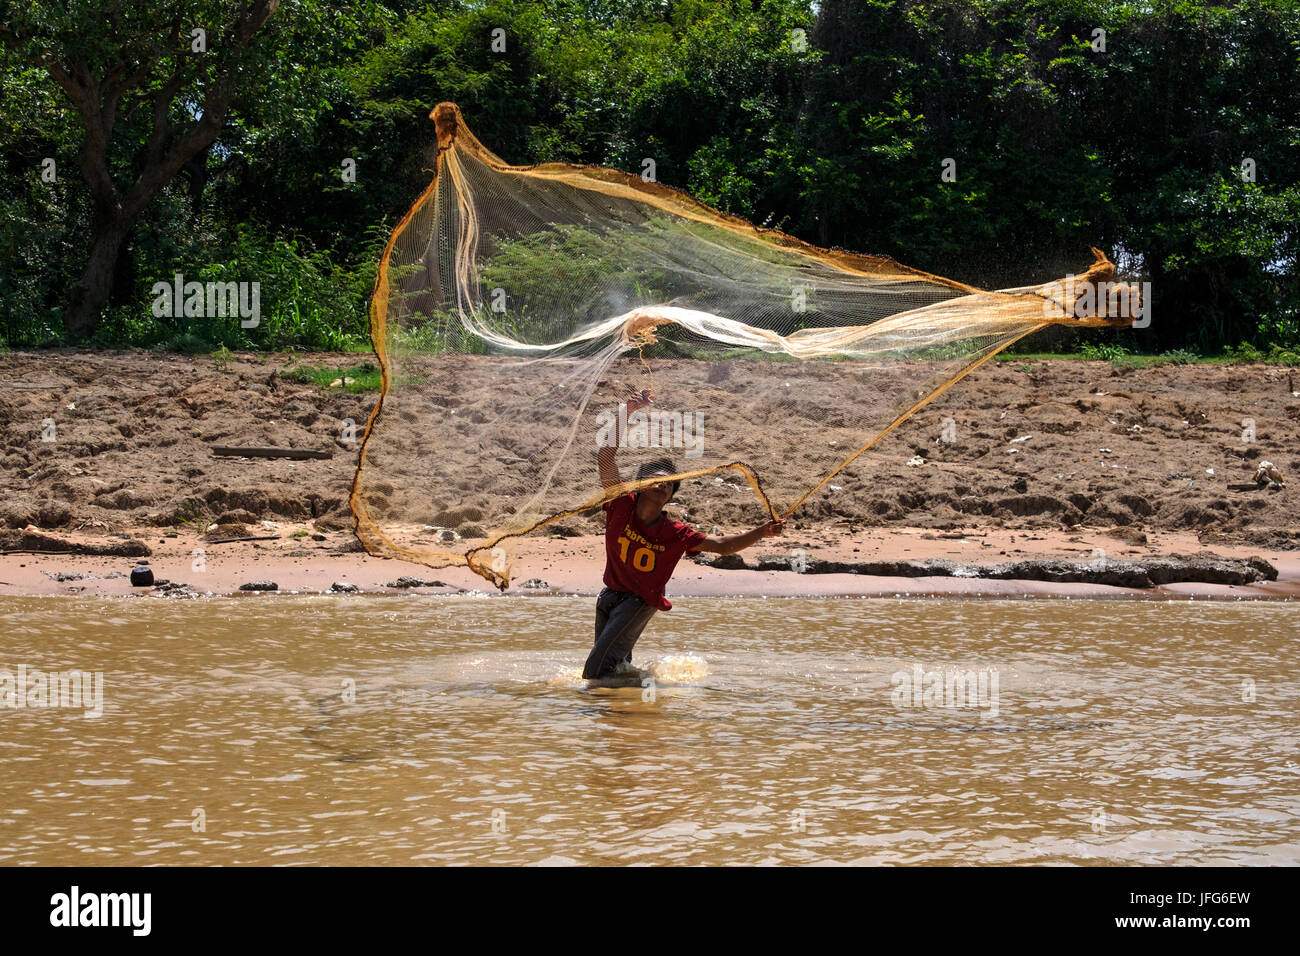 PESCADOR tira la RED atarraya al Río mira la SORPRESA - pesca